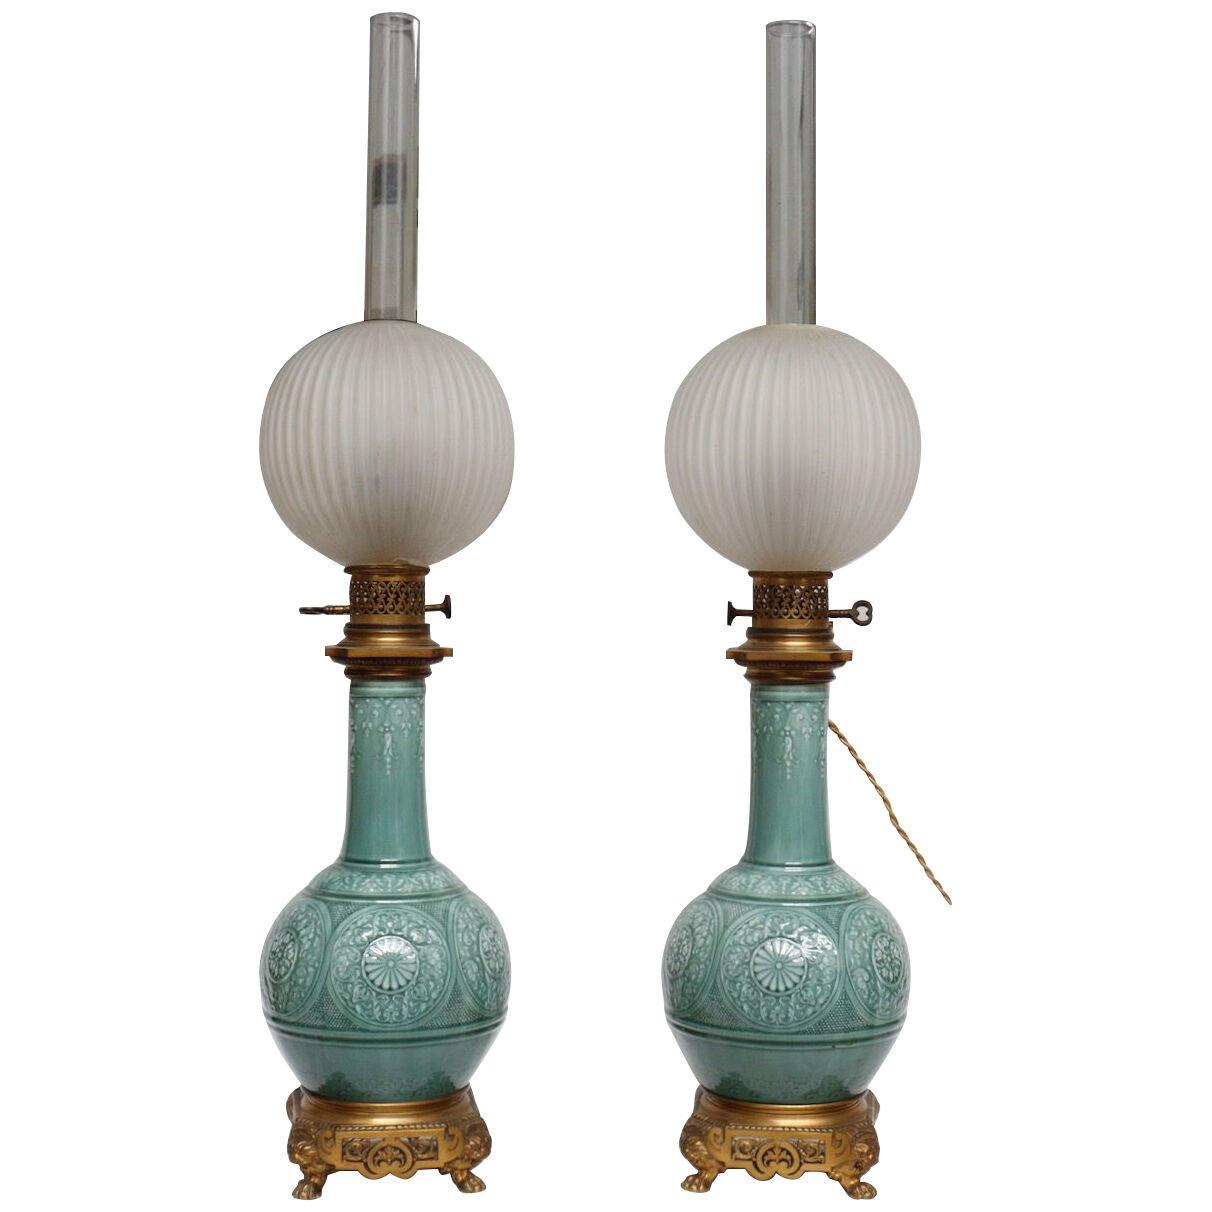 Pair of Théodore Deck Celadon Enamelled Faience Vases Ormolu-Mounted in Lamps 